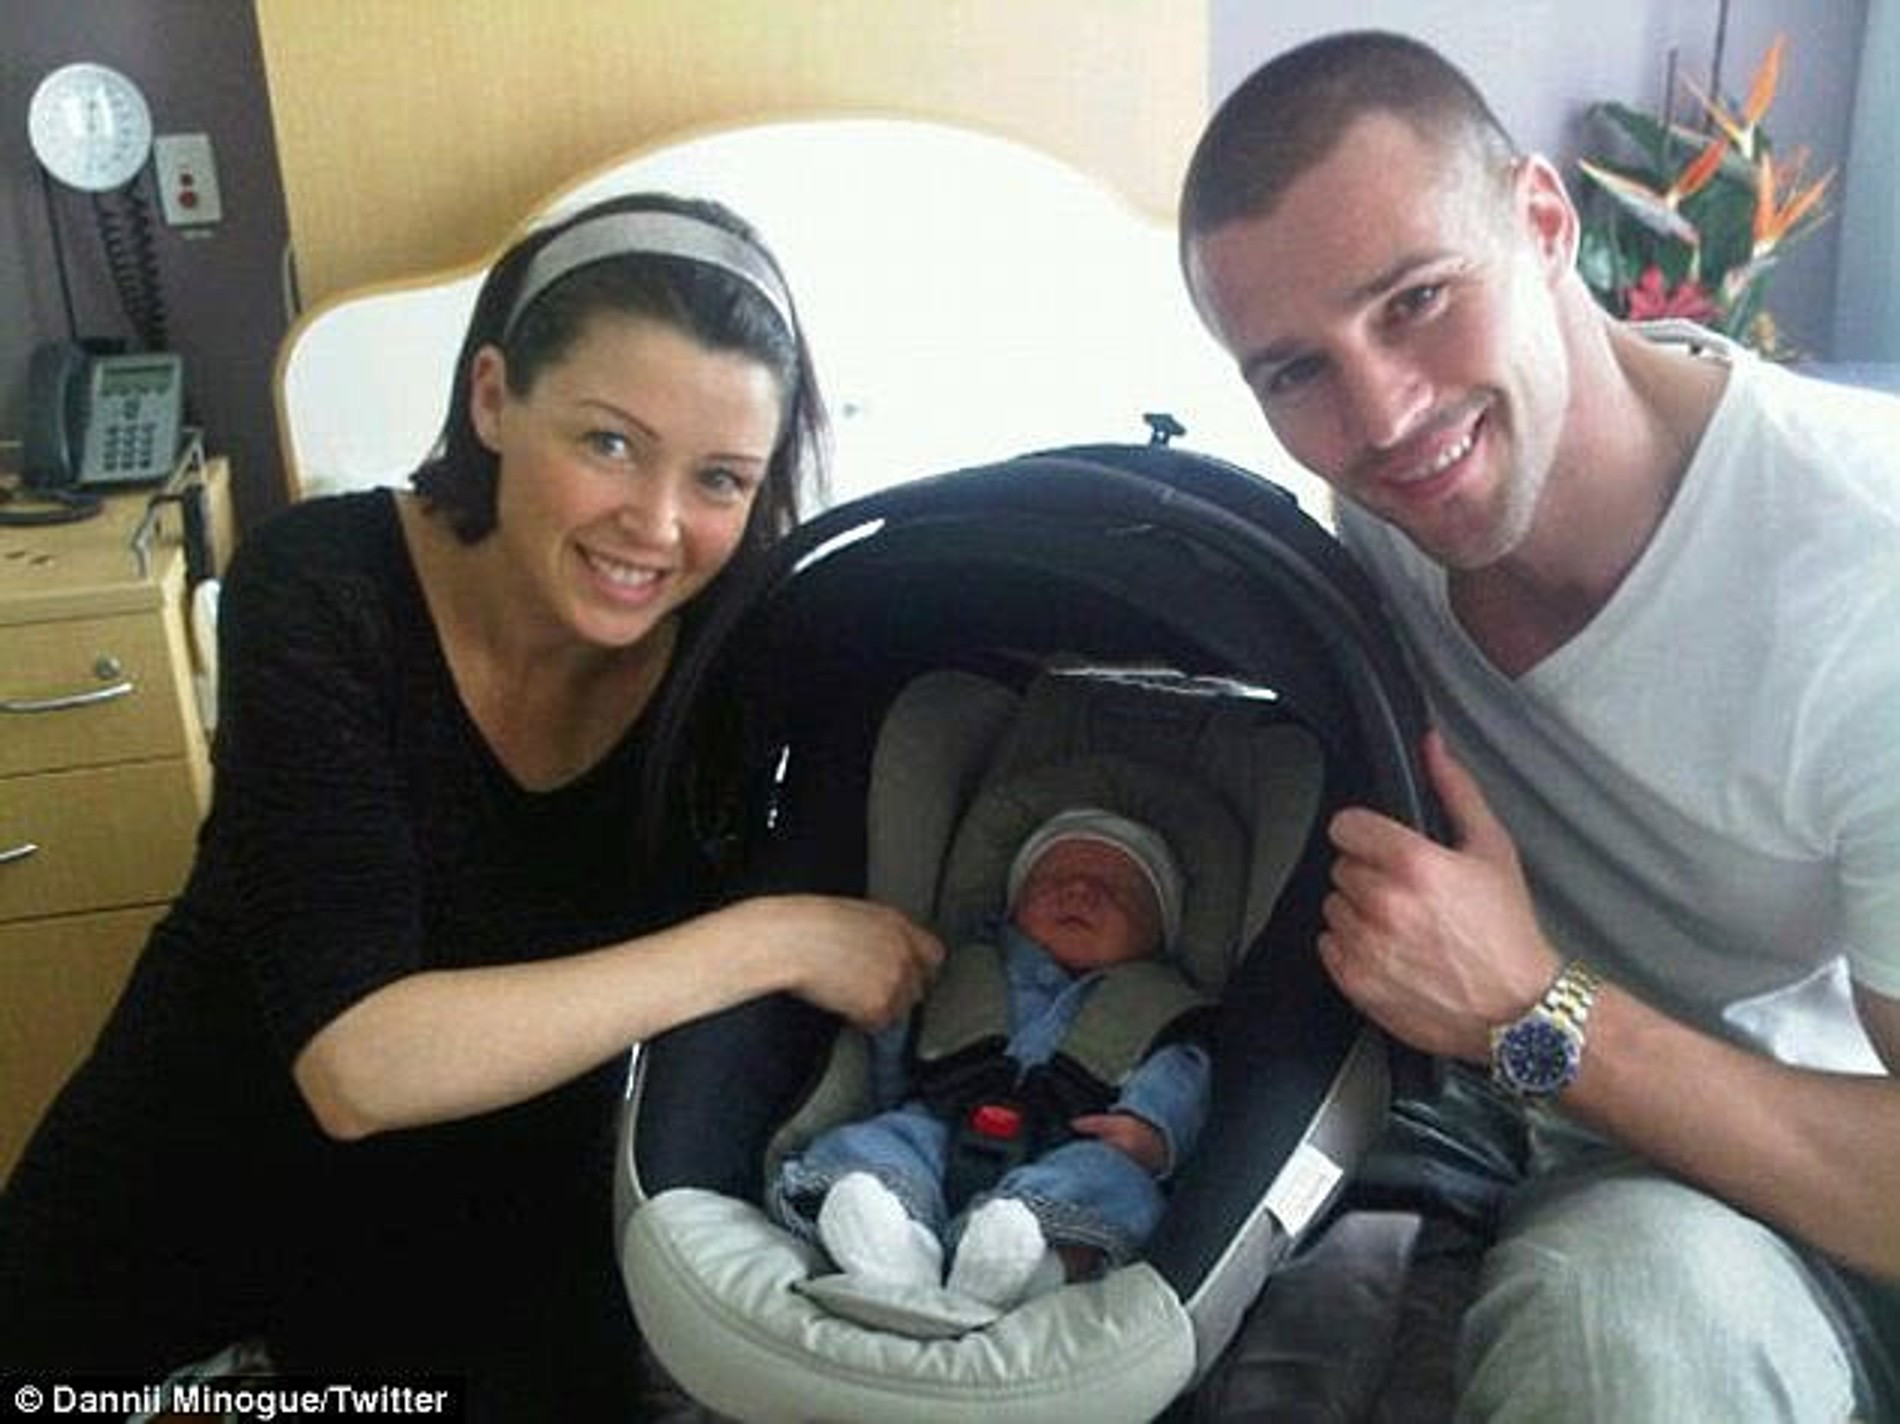 Данни Миноуг, Крис Смит и их сын Итан
Фото: Daily Mail